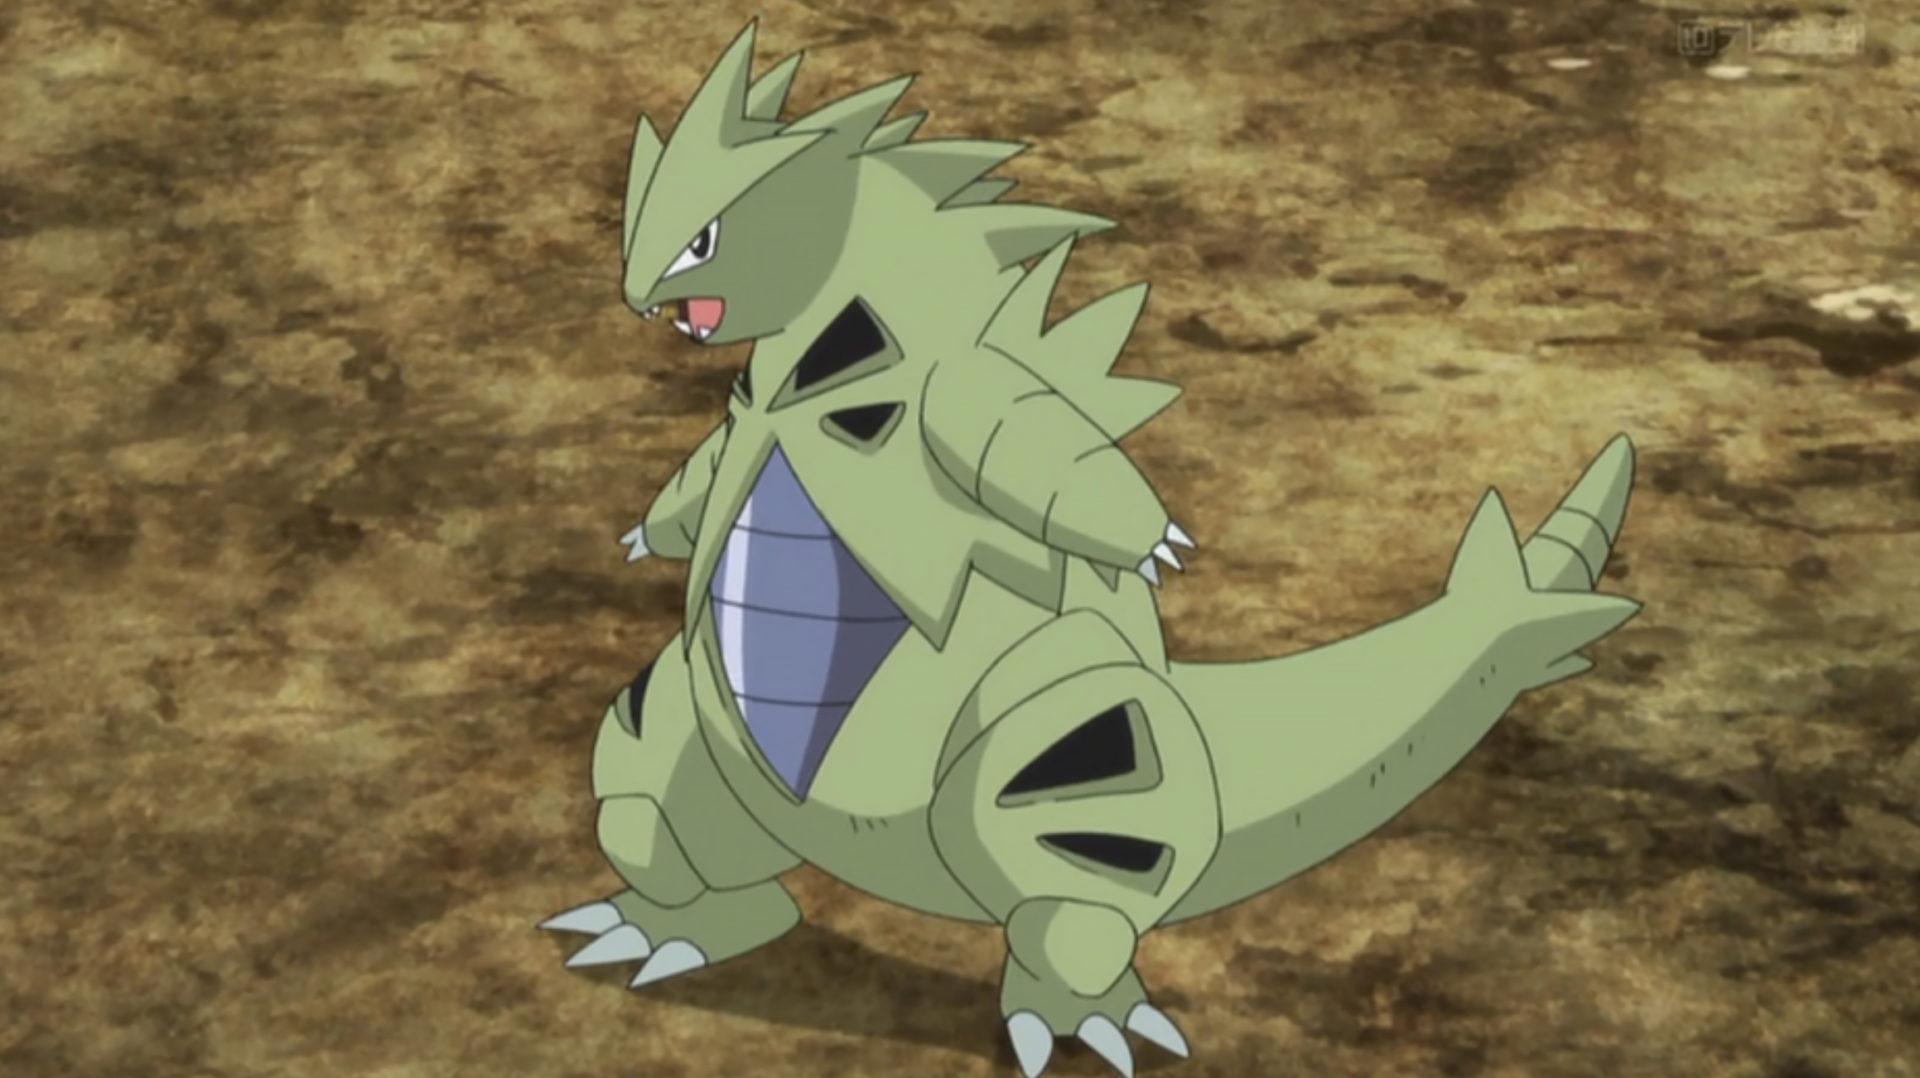 Screenshot of Tyranitar from the Pokemon anime.